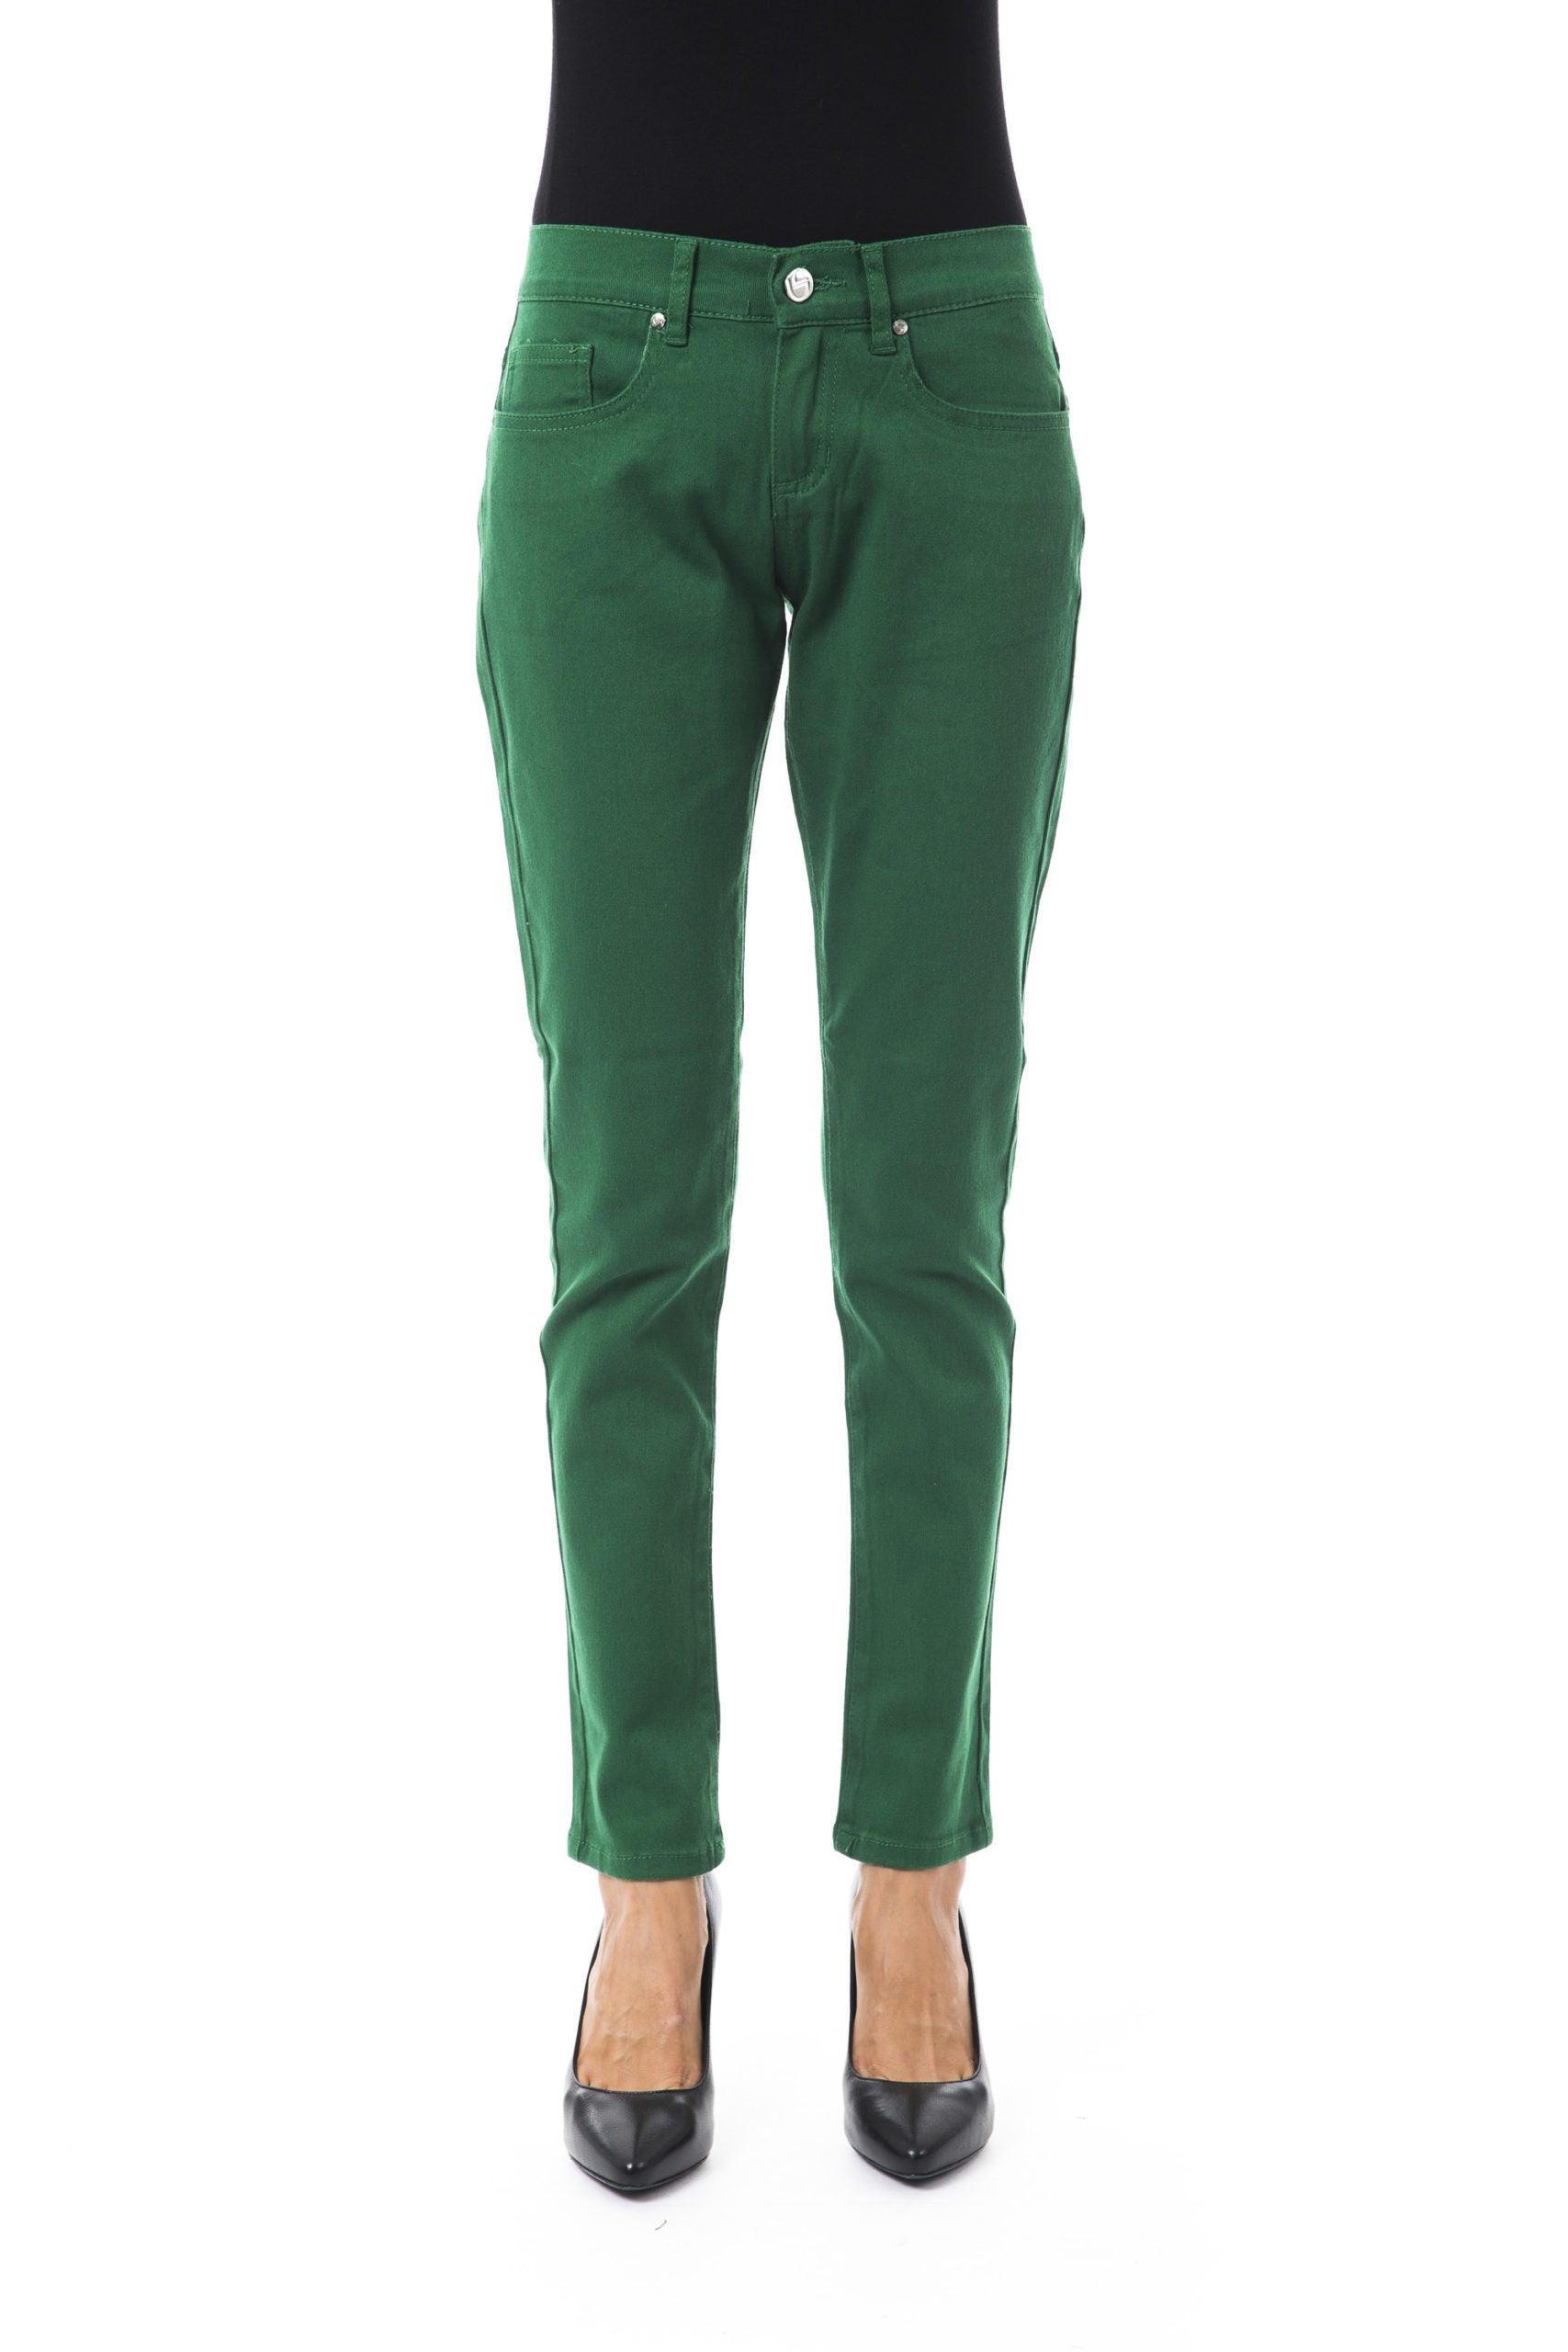 Byblos Green Cotton Jeans & Pant | Lyst